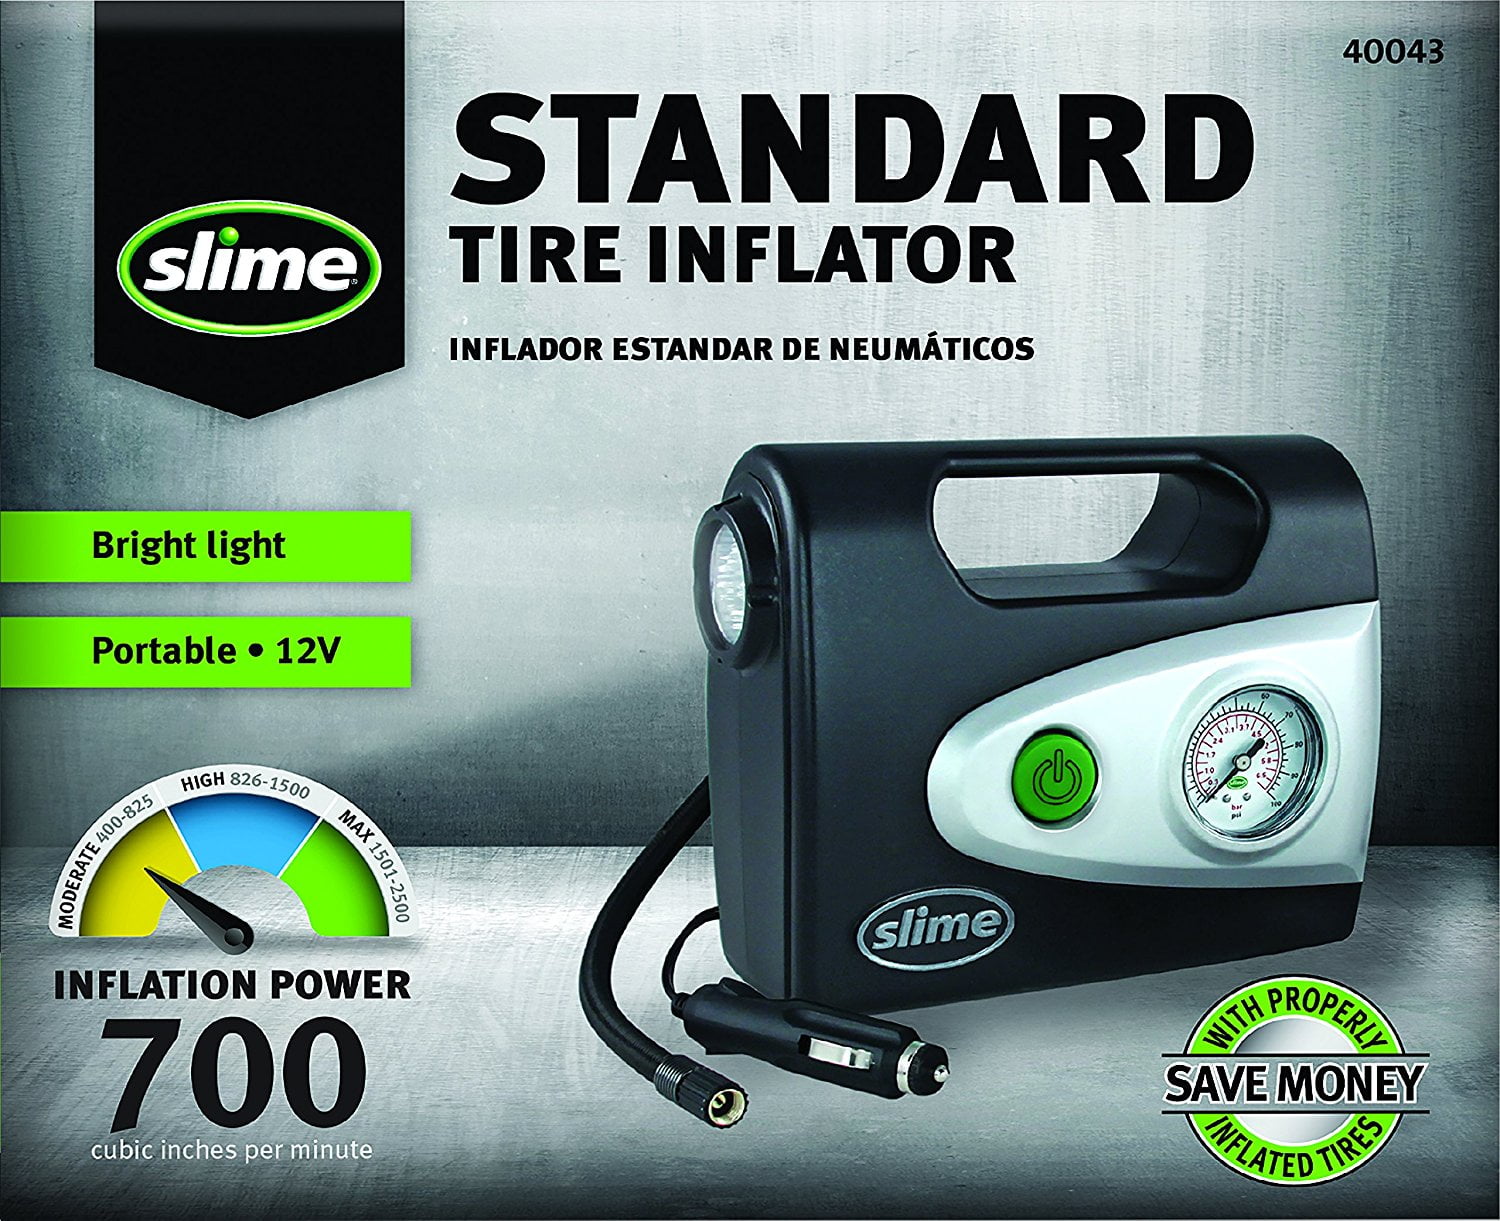 tire inflator Amazon.com: JACO FlowPro Tire Inflator Slime 12V Standard Tir...